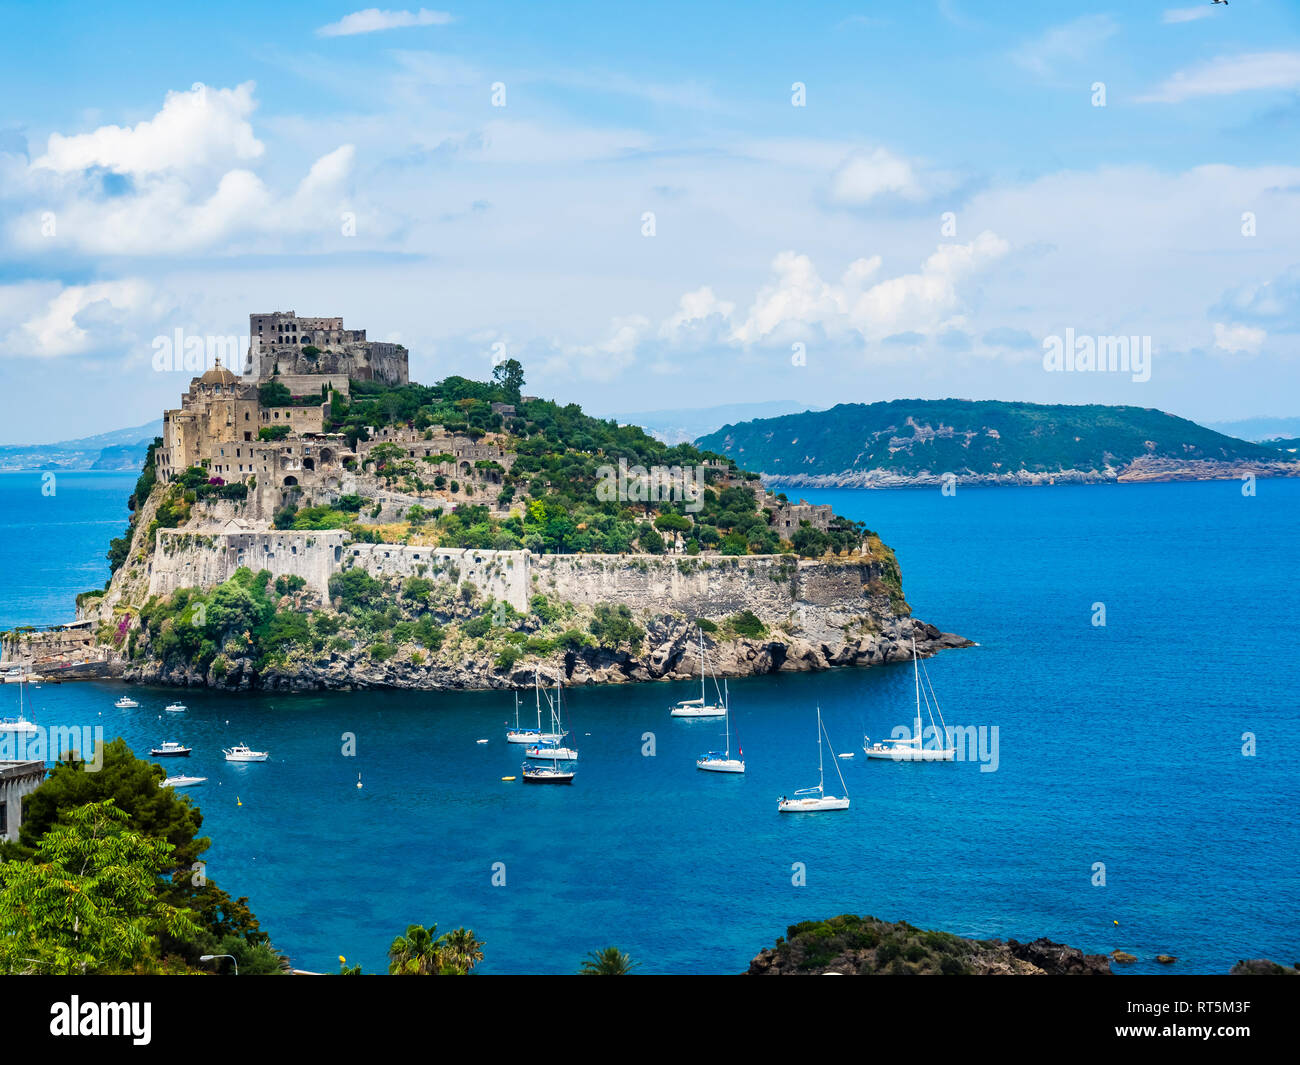 Italy, Campania, Naples, Gulf of Naples, Ischia Island, Aragonese Castle on rock island Stock Photo